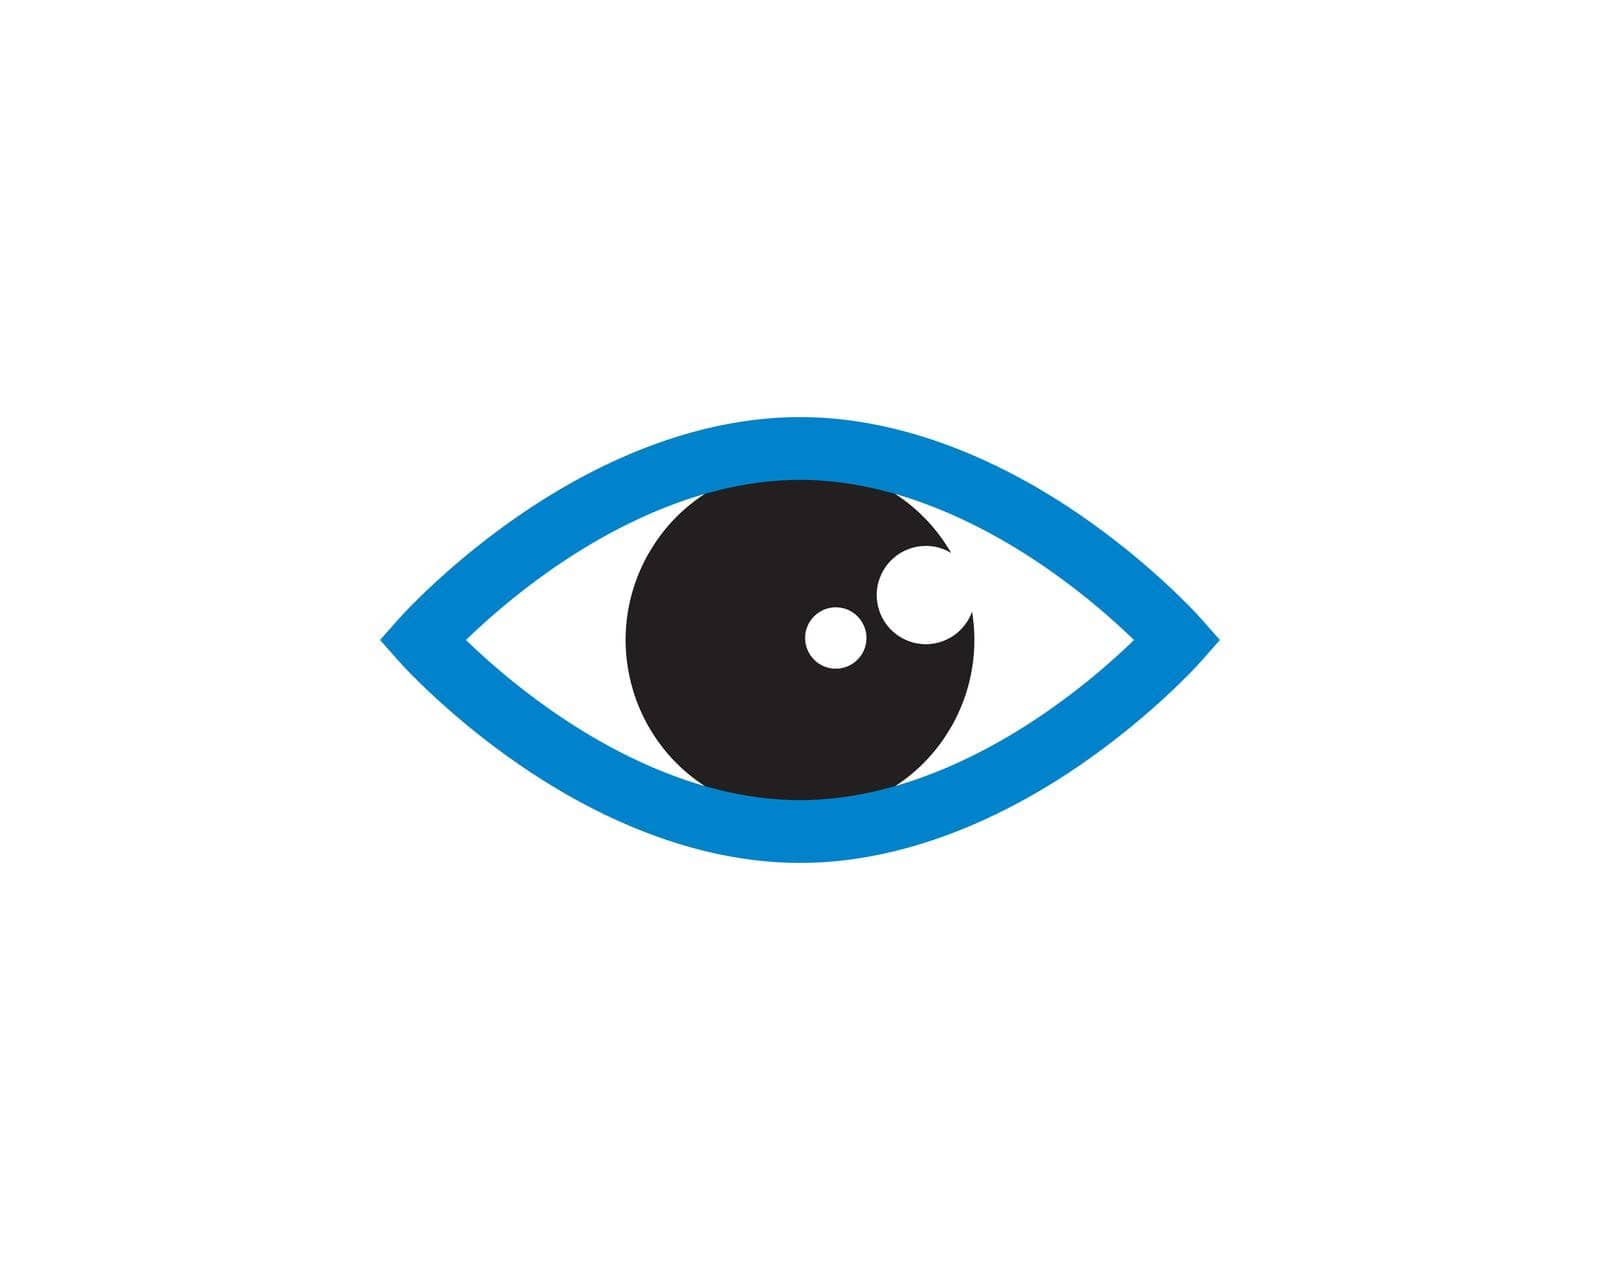 Eye symbol vector illustration design by Fat17